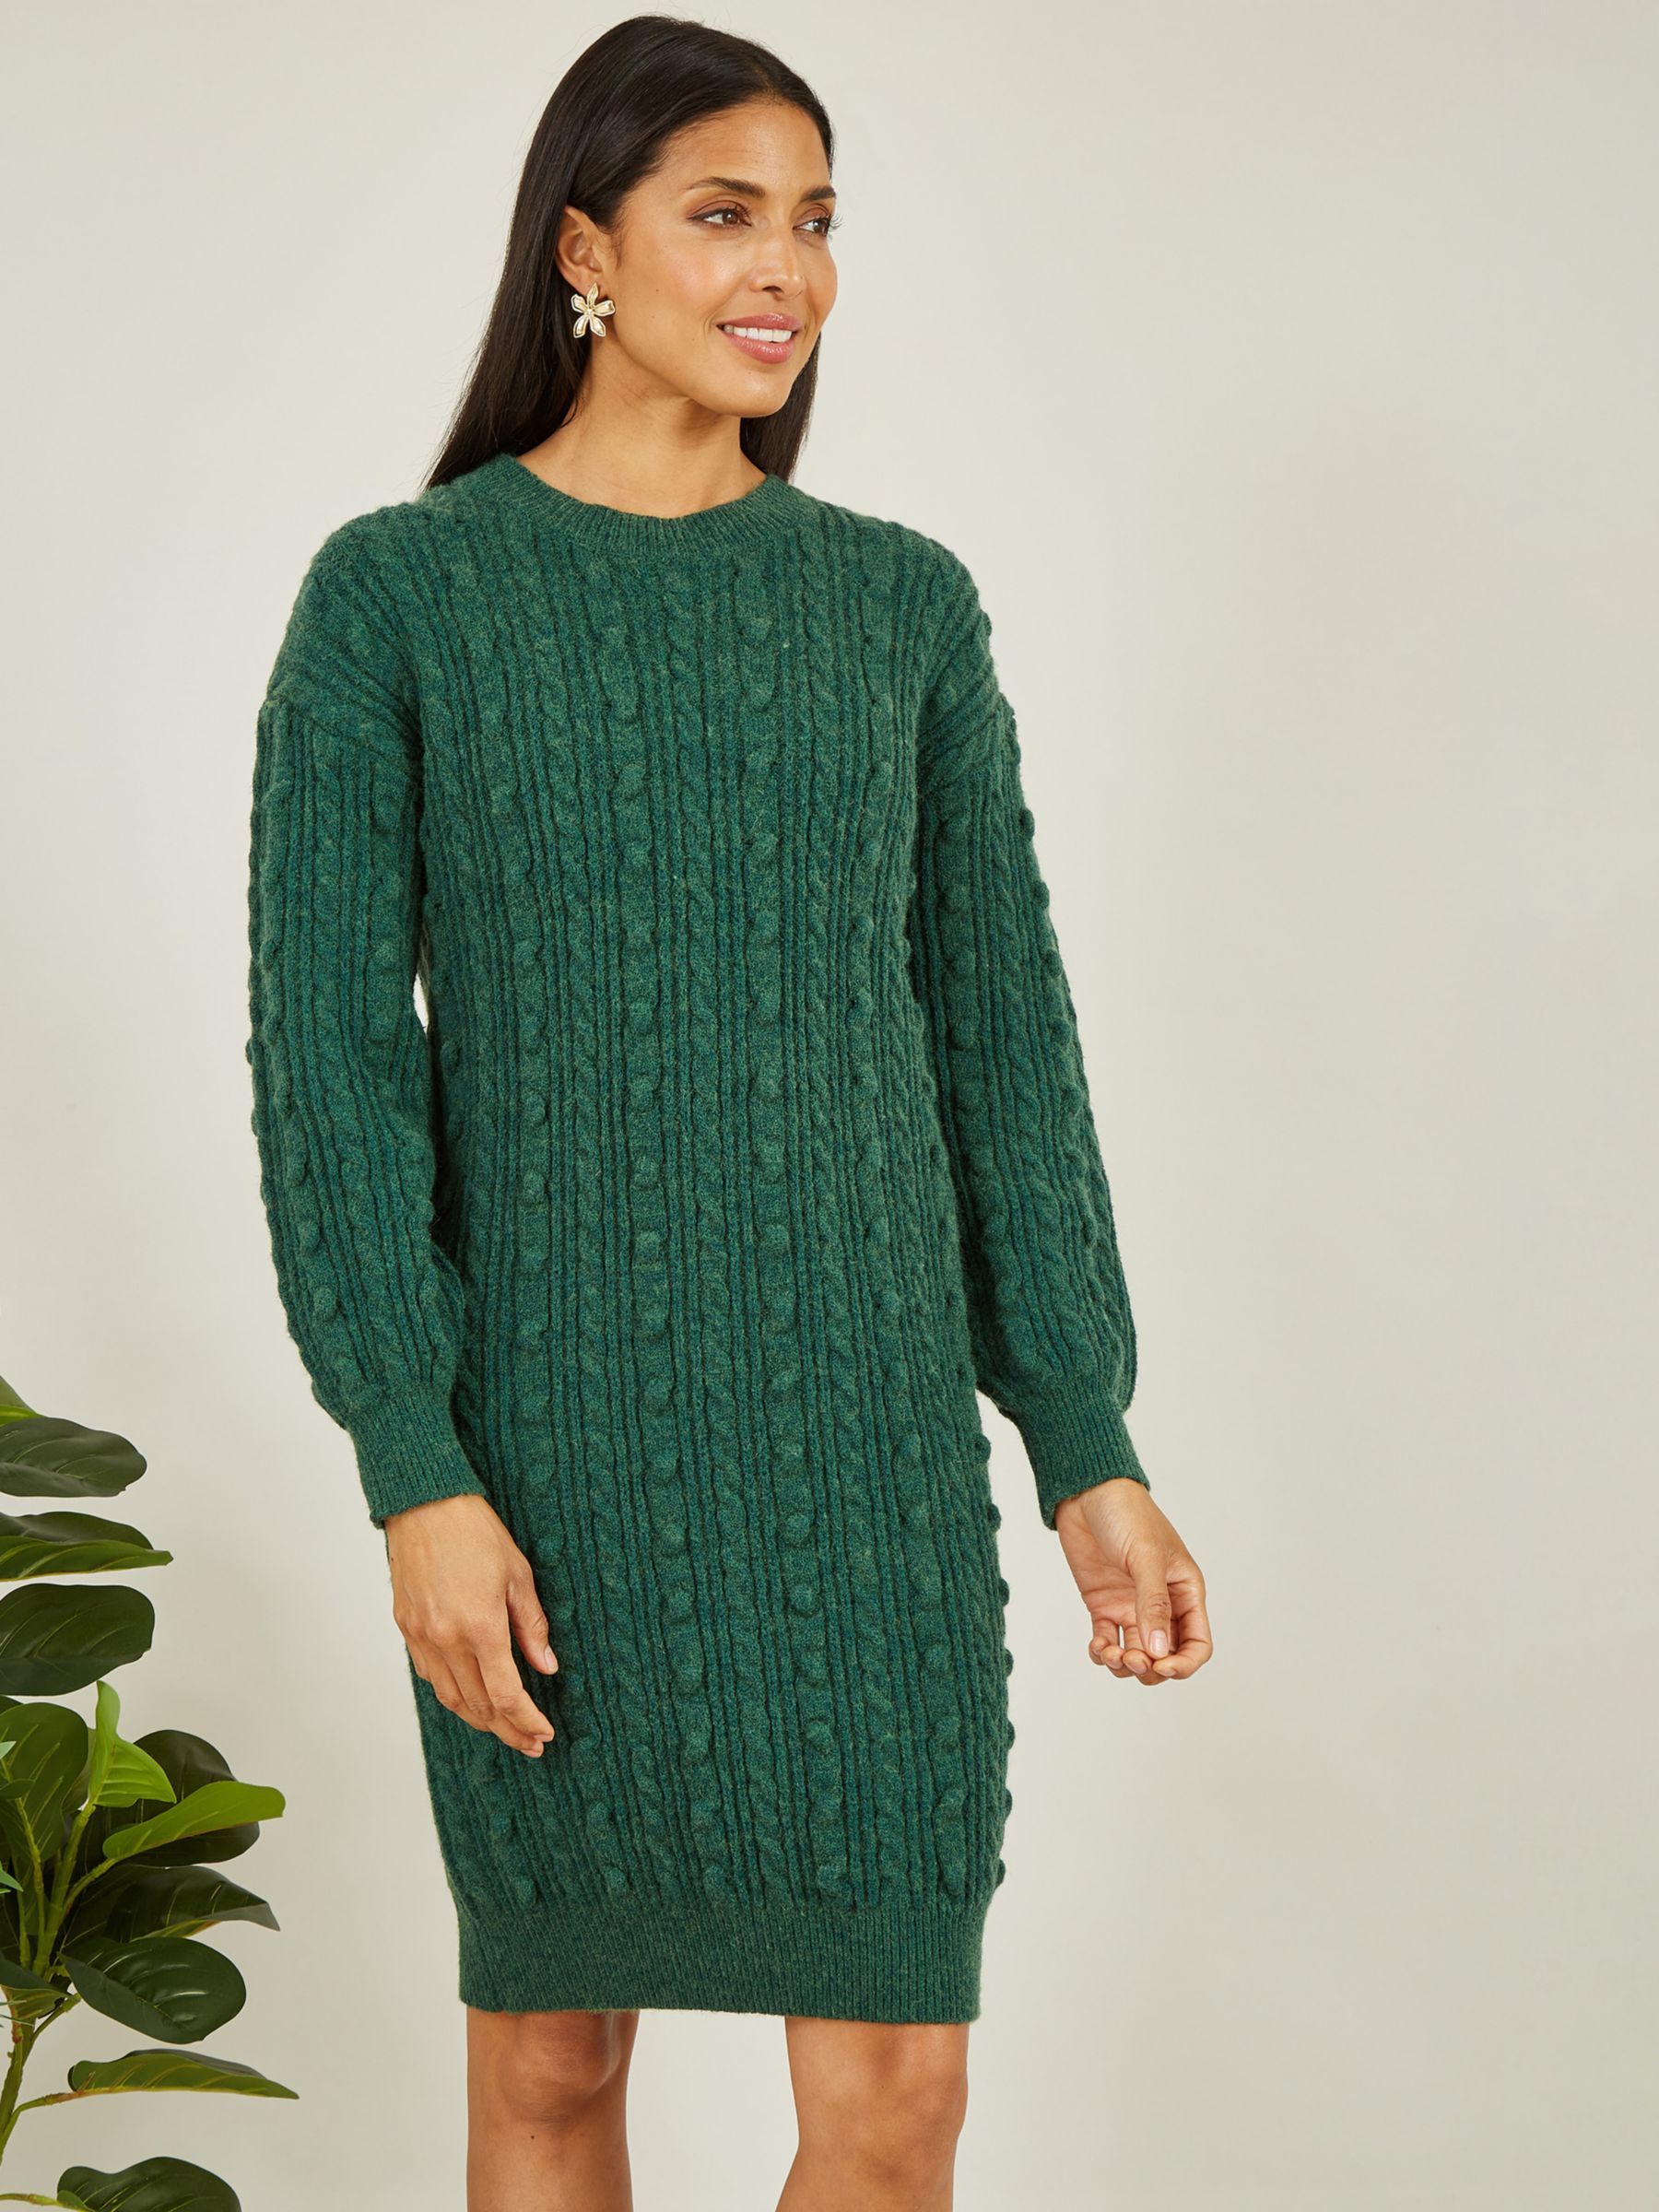 Women's Jumper Dresses, knitted dress